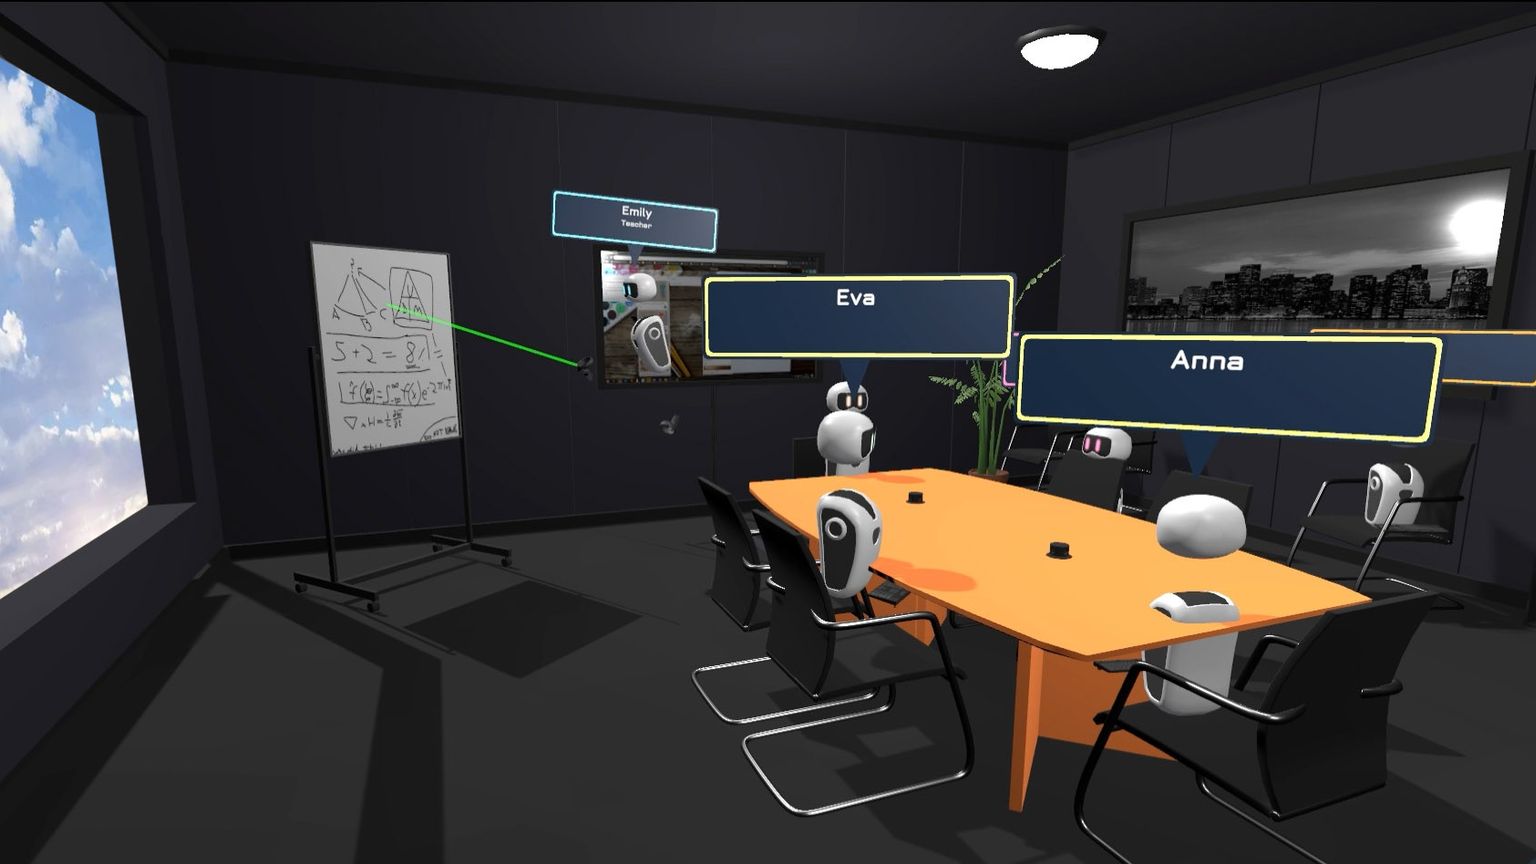 The virtual meeting room 